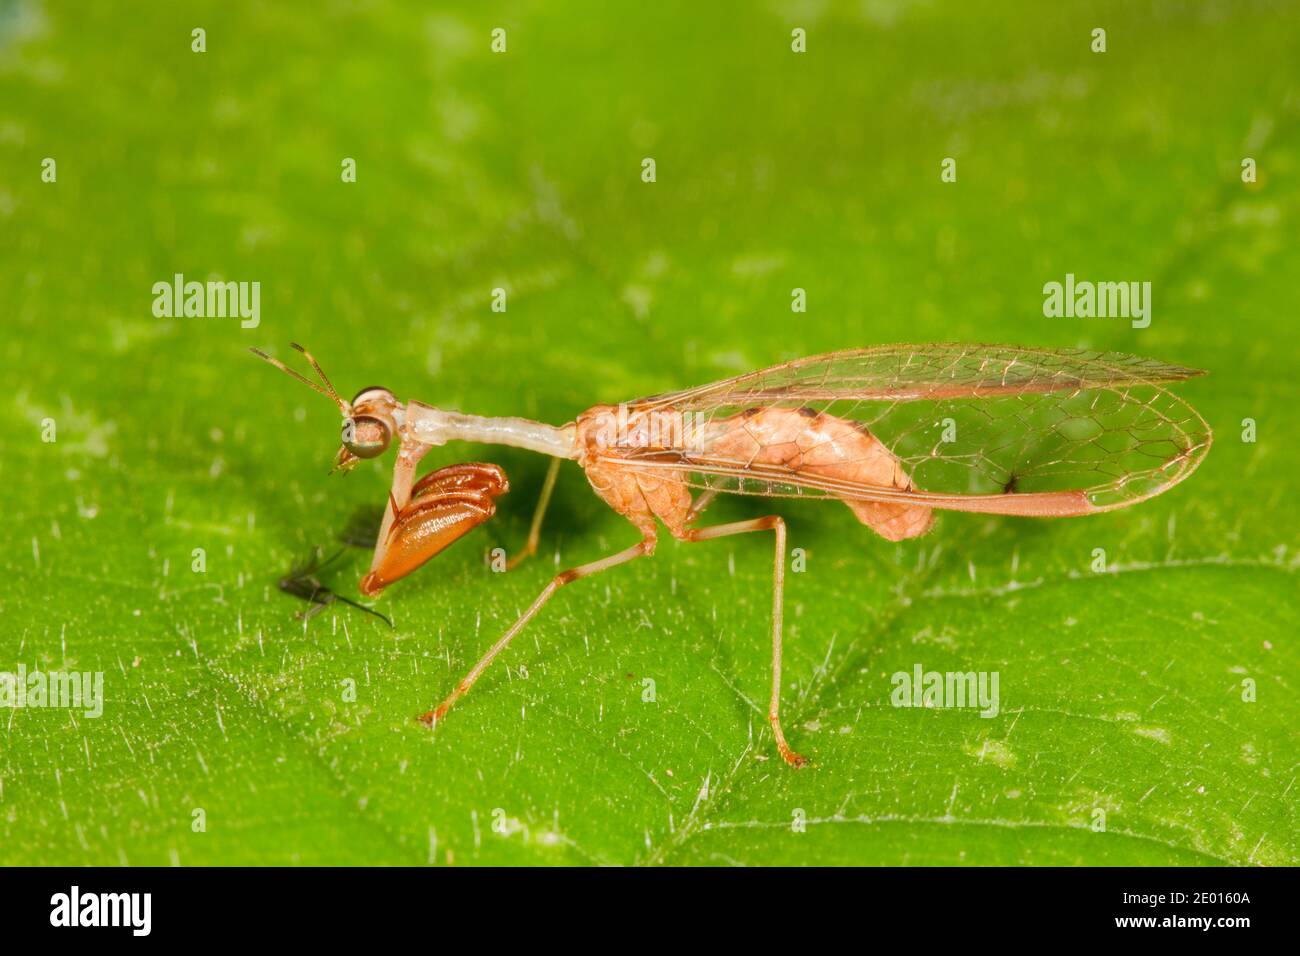 Mantisfly, Dicromantispa sayi, Mantispidae. Body Length 14 mm. Stock Photo